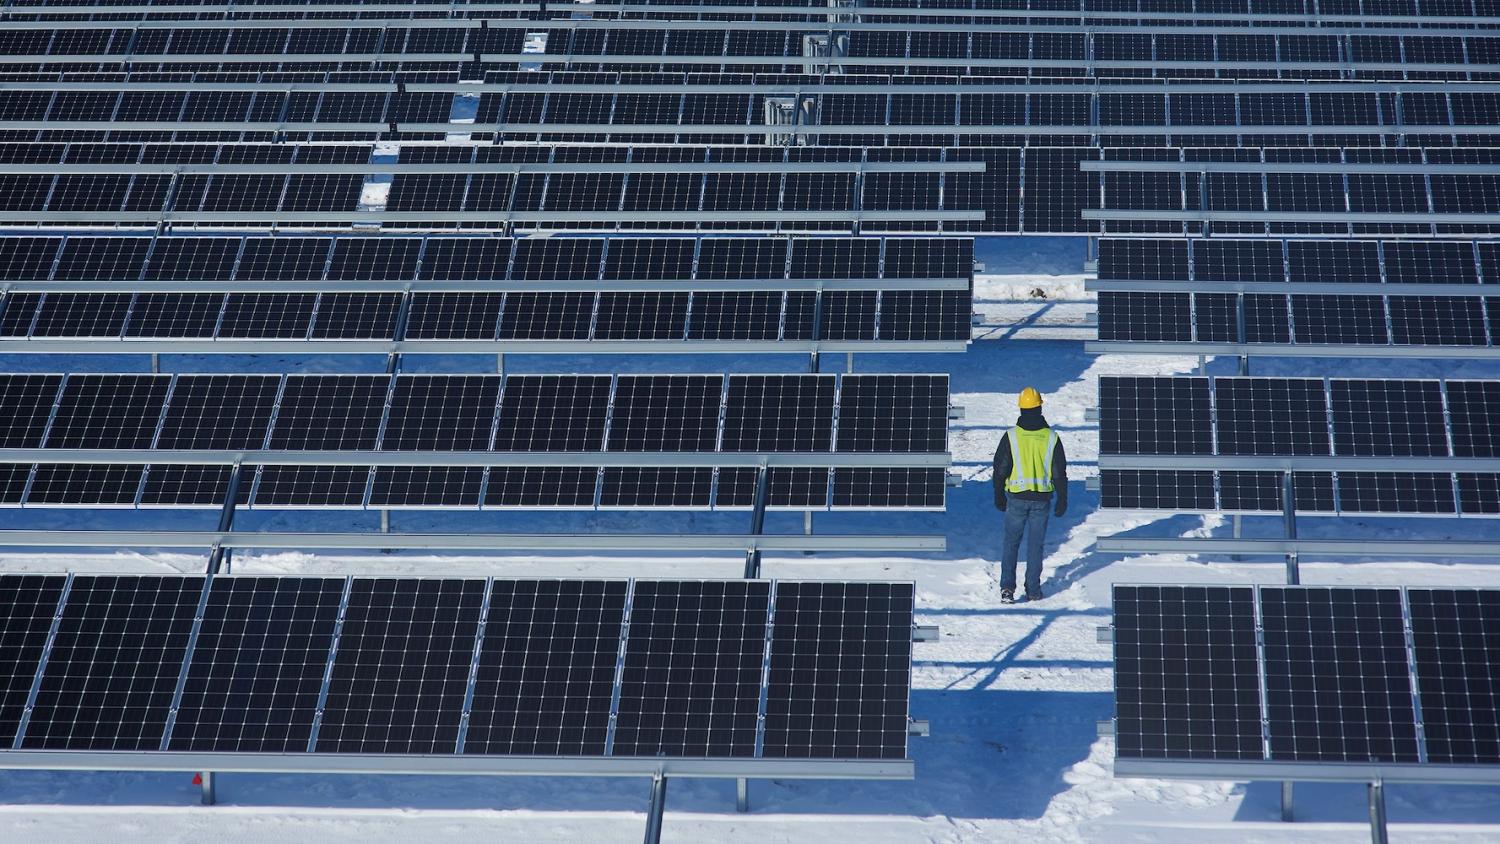 worker walks through shared michigan solar garden in the snow - community solar 